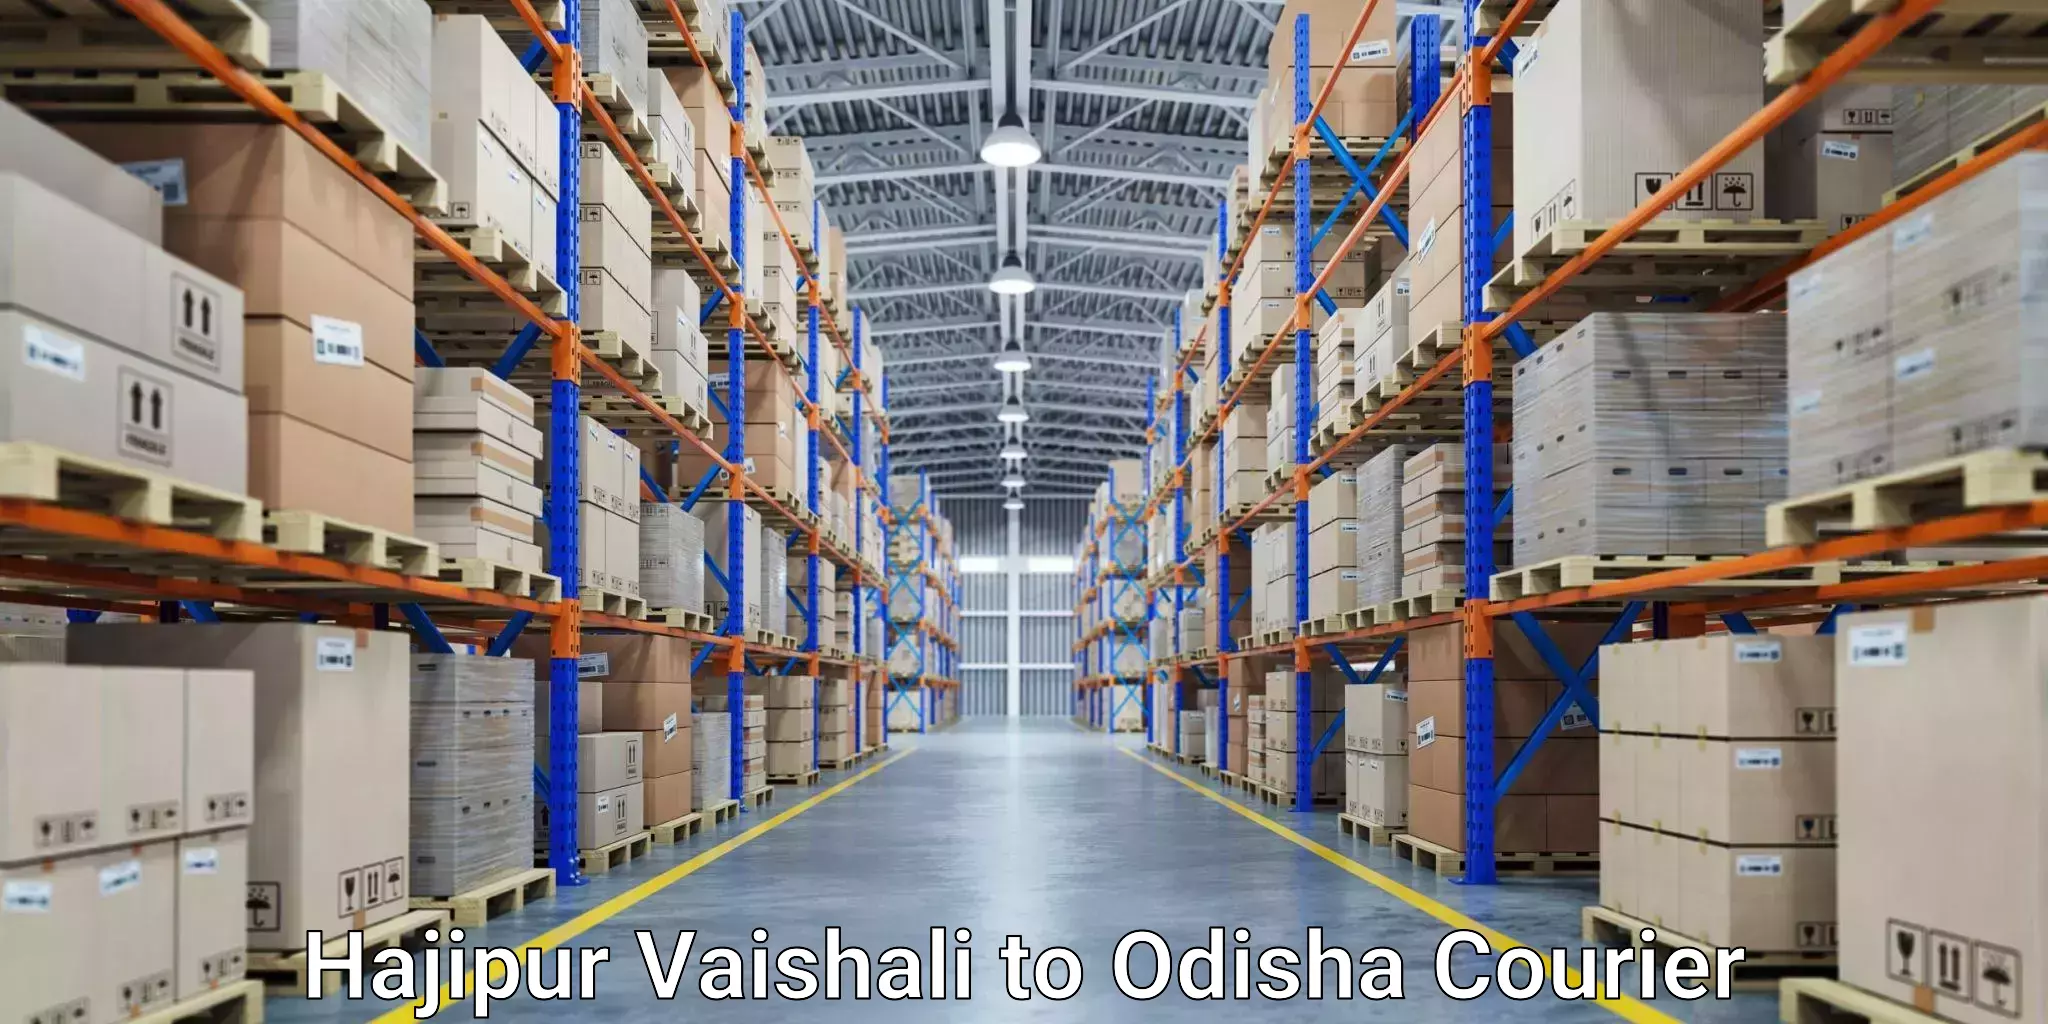 Courier service innovation Hajipur Vaishali to Khaprakhol